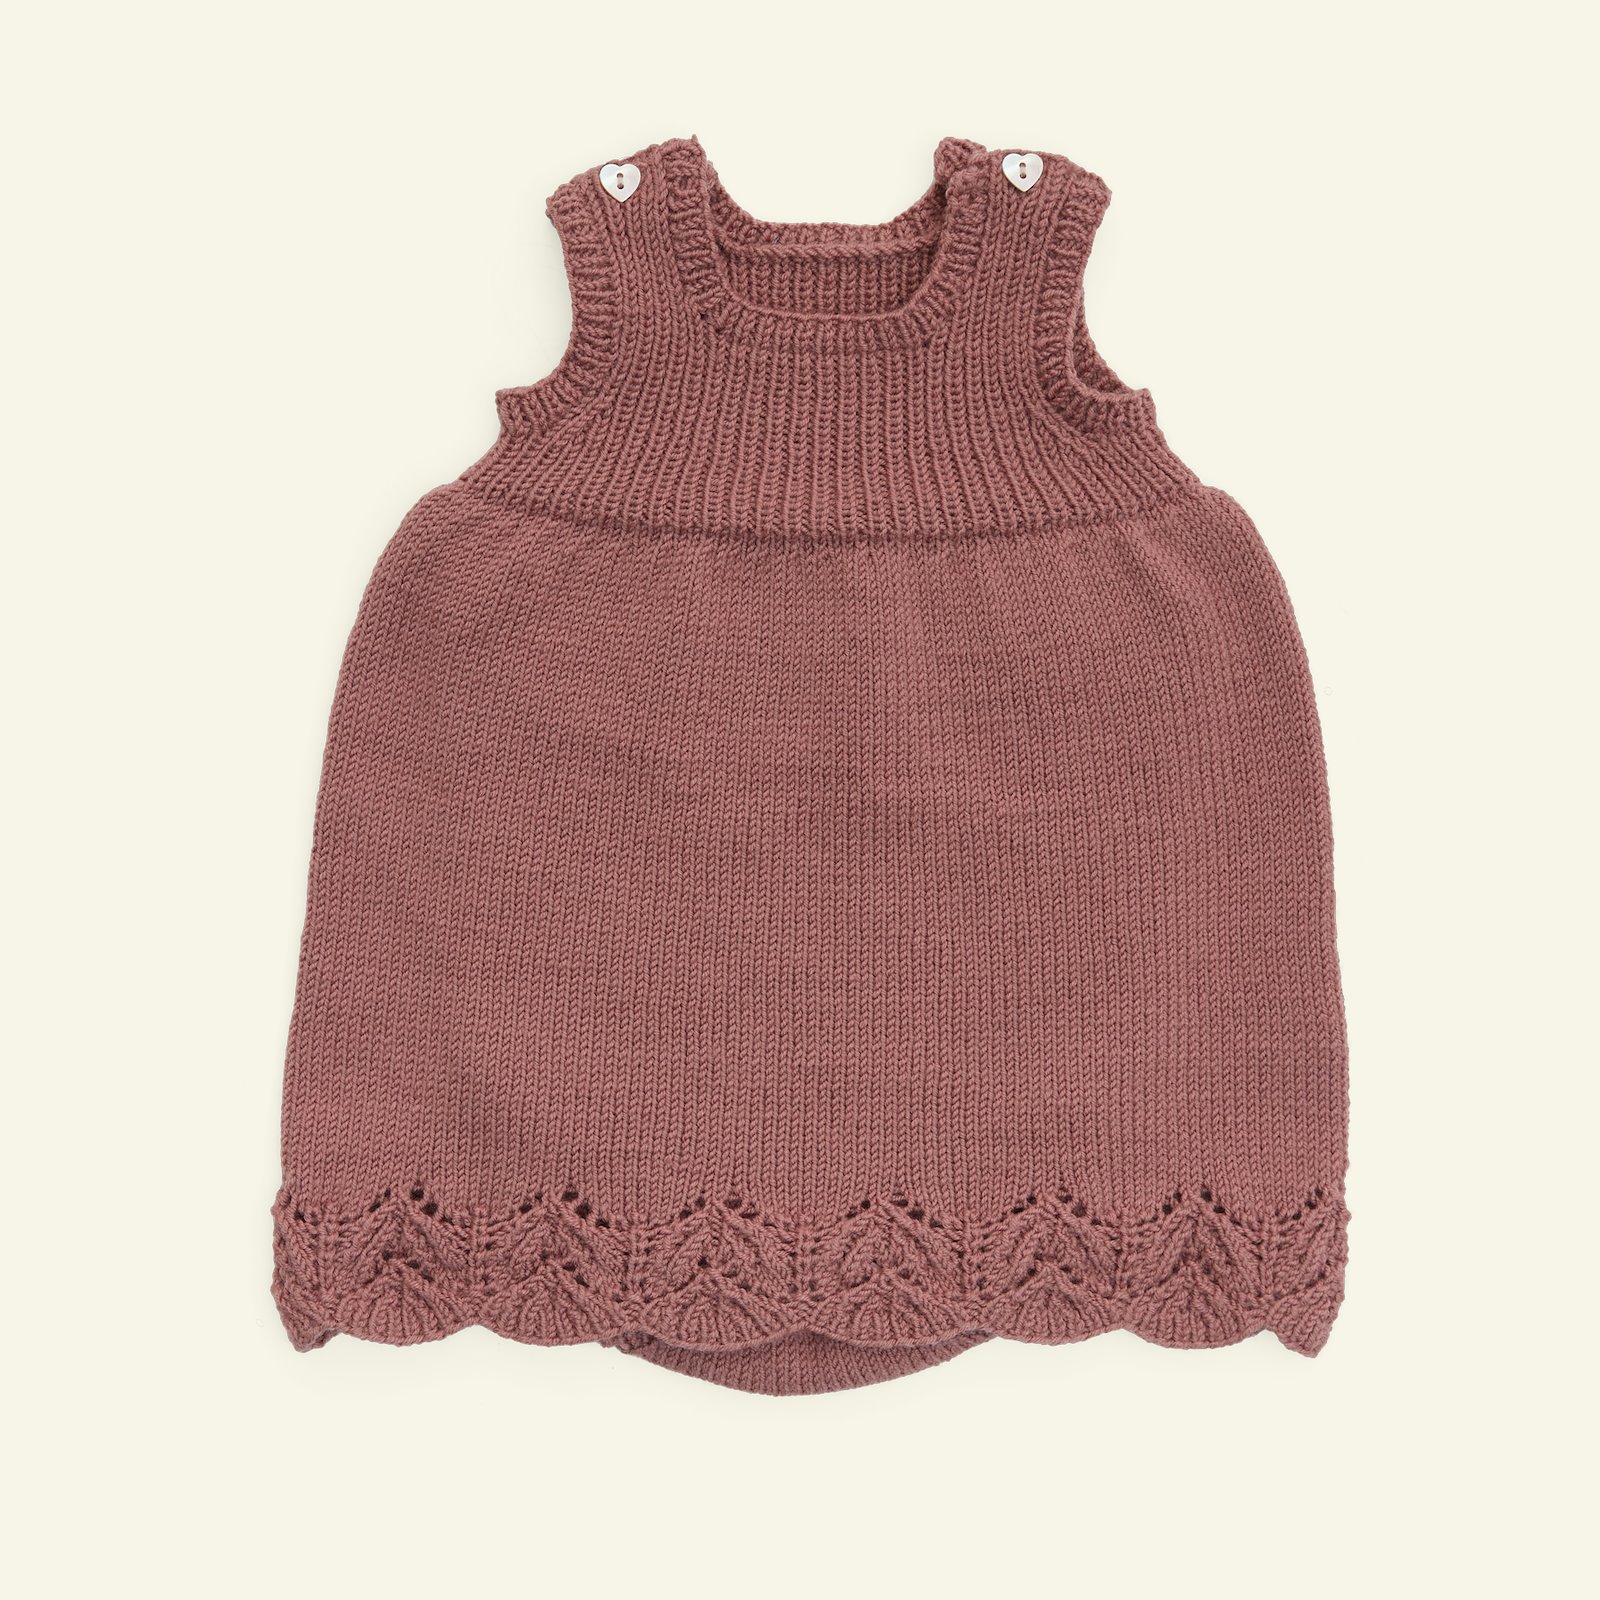 FRAYA knitting pattern – Dance baby romper dress FRAYA6052_image_b.png